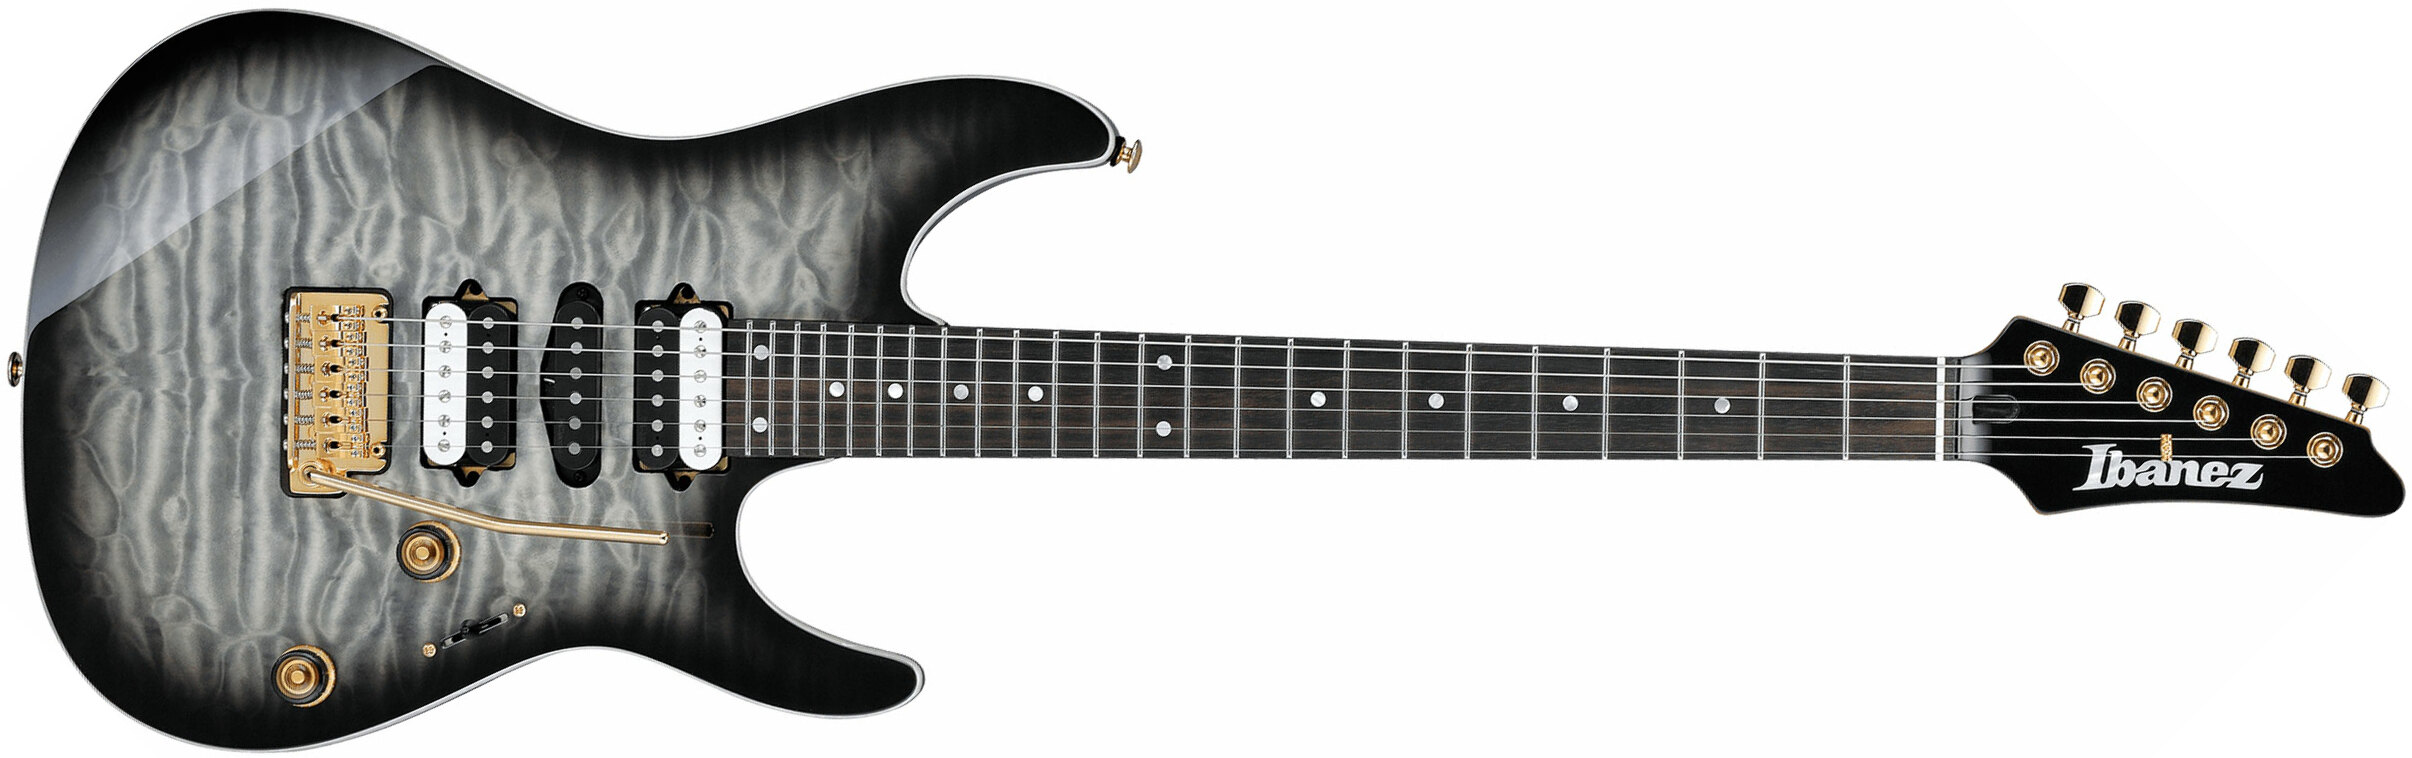 Ibanez Az47p1qm Bib Premium Hsh Di Marzio Trem Eb - Black Ice Burst - Str shape electric guitar - Main picture